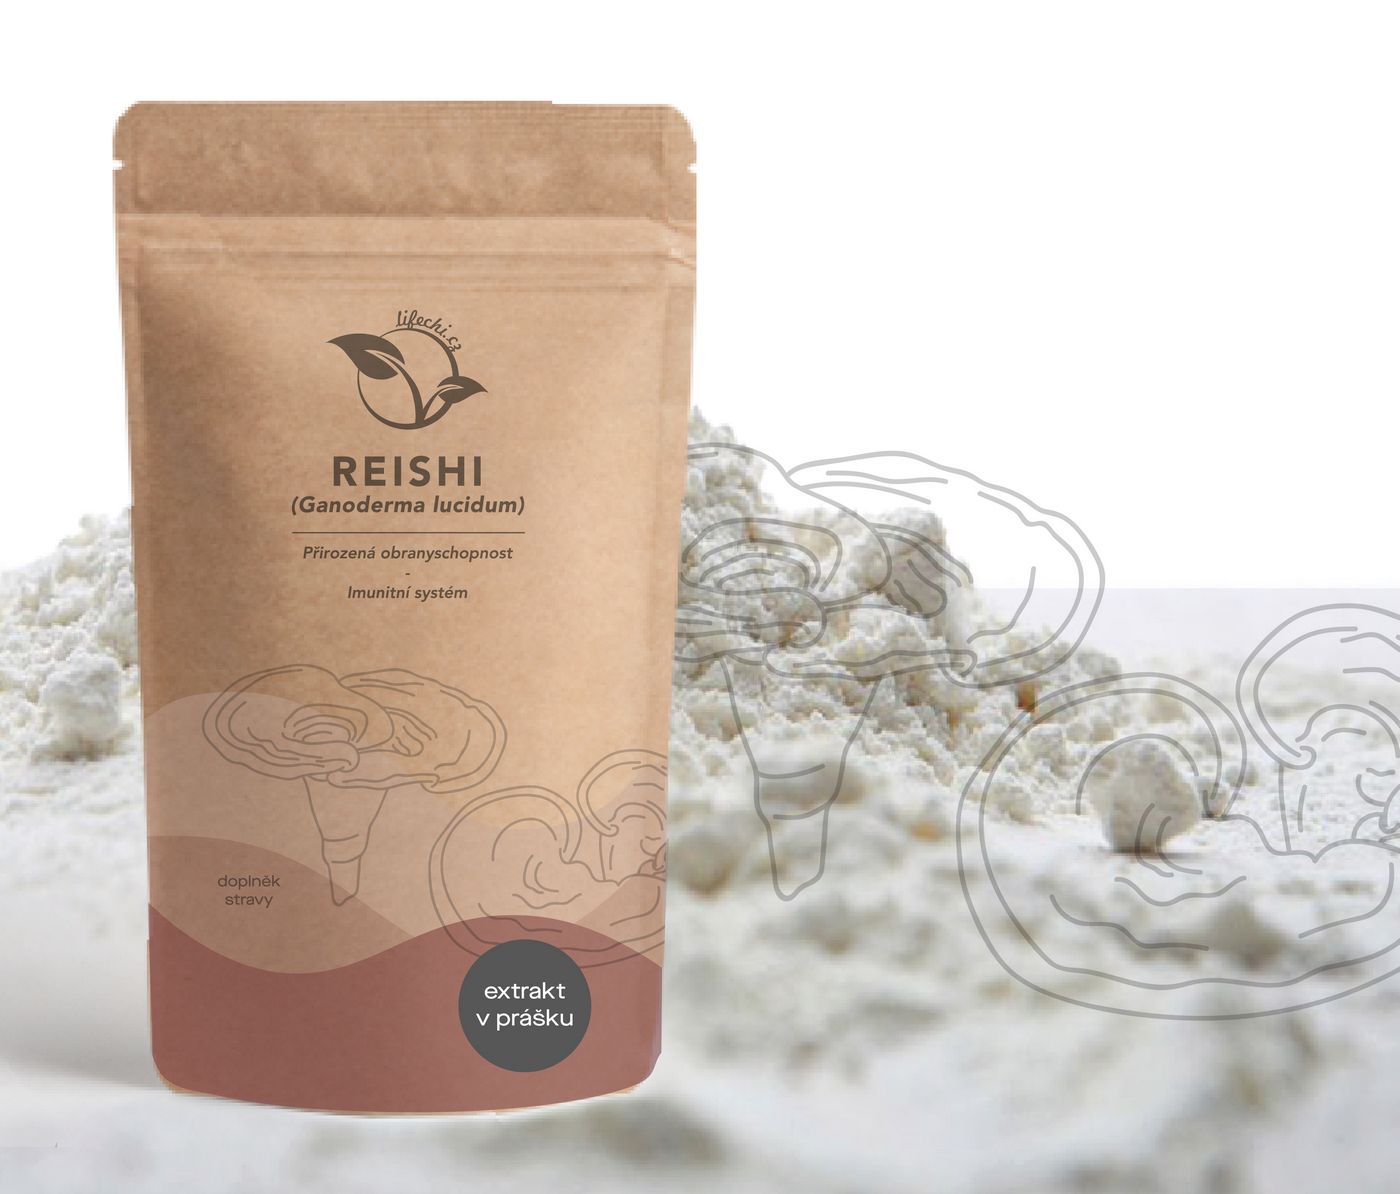 LifeChi - Reishi (Ganoderma lucidum) extrakt v prášku 50 g - (30% polysacharidů)